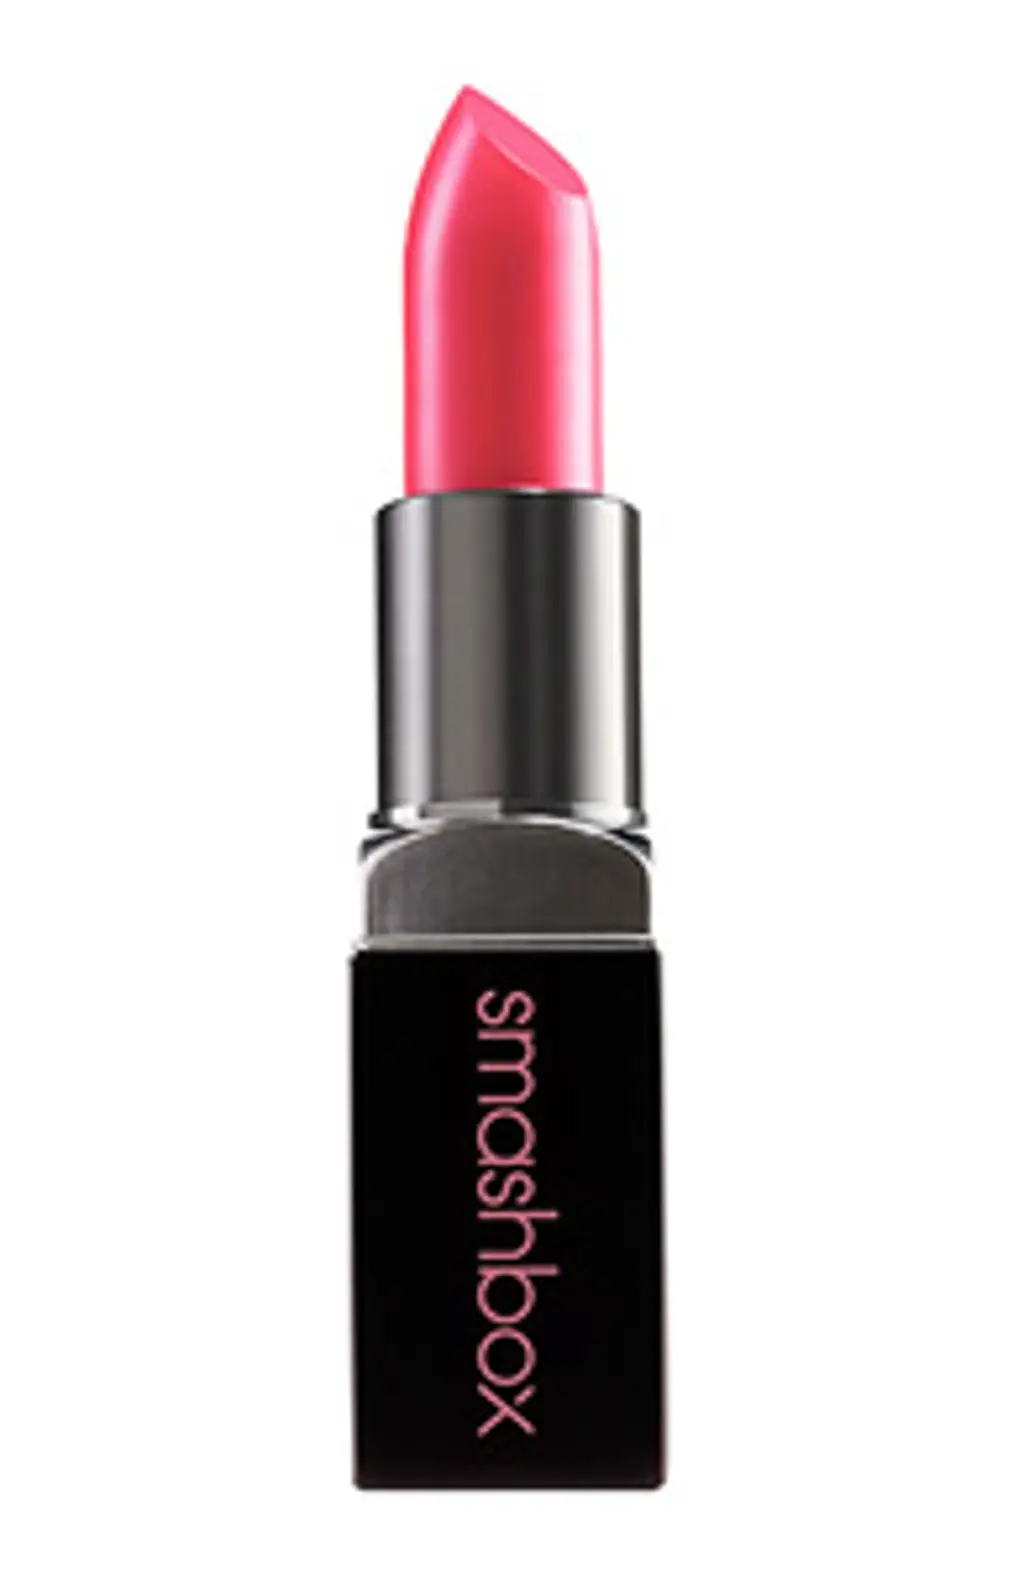 Smashbox Legendary Lipstick in ‘Pink Petal’